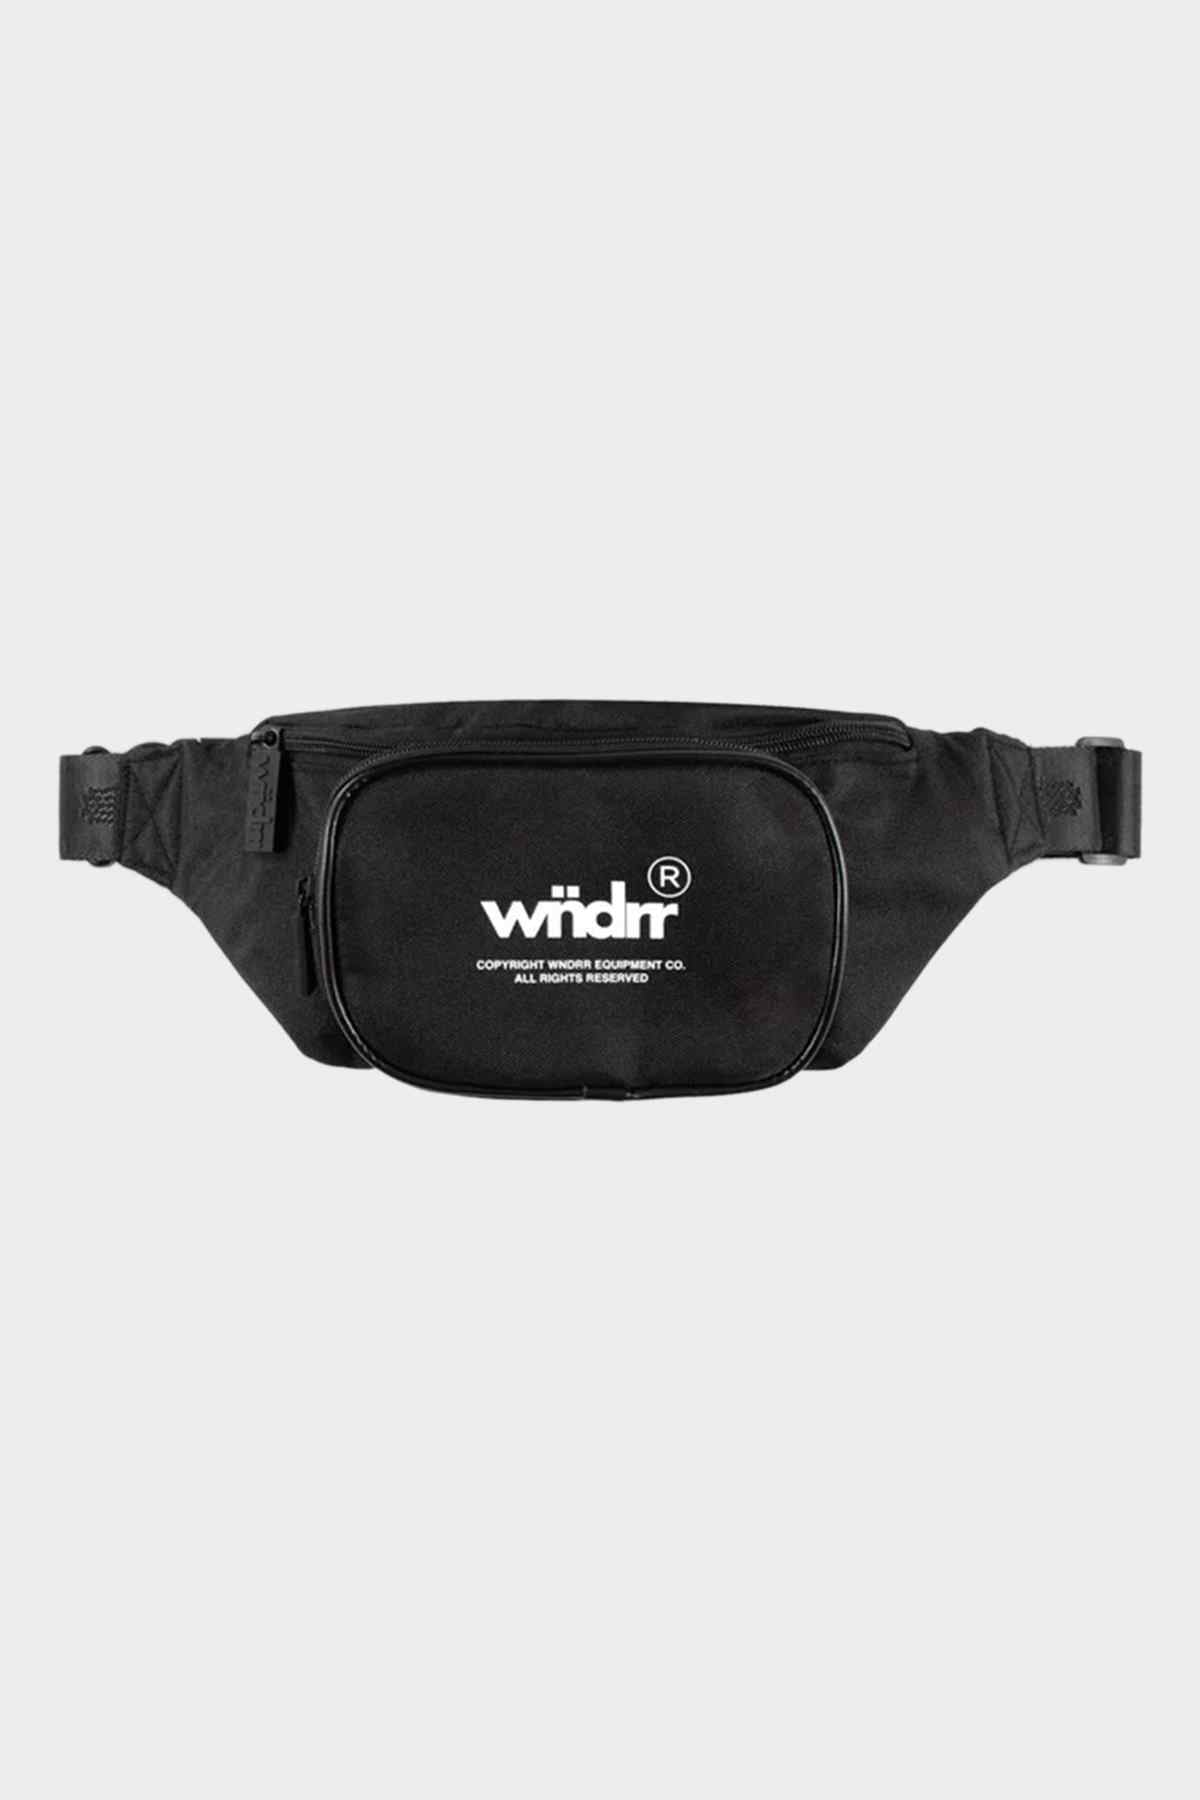 WNDRR Offcut Bum Bag Black